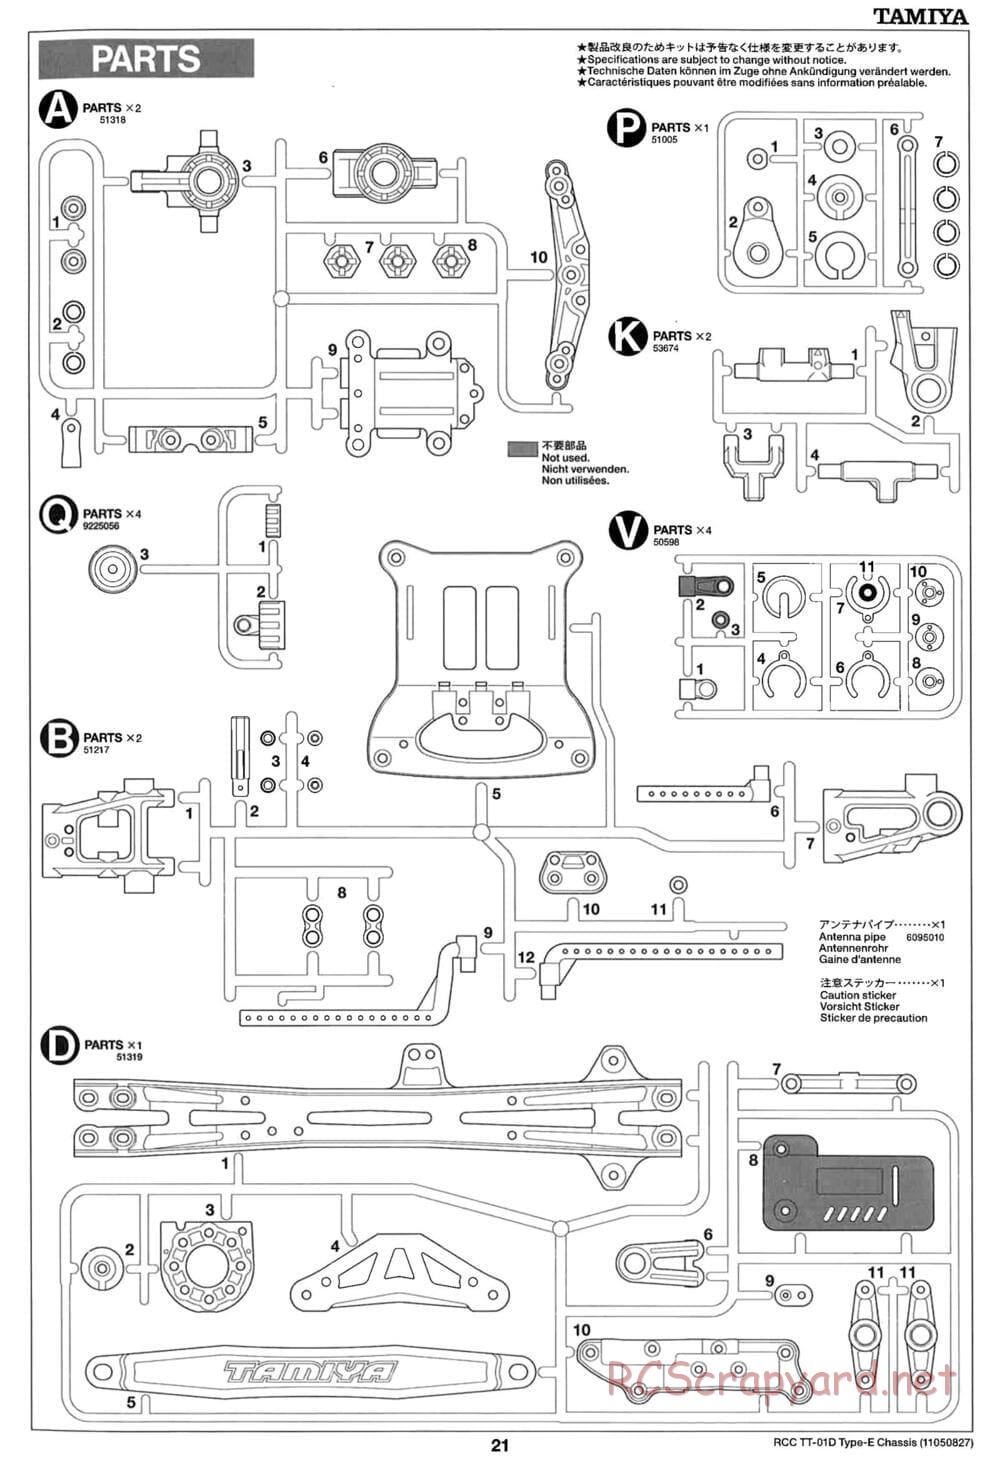 Tamiya - TT-01D Type-E (TT-01ED) - Drift Spec Chassis - Manual - Page 21